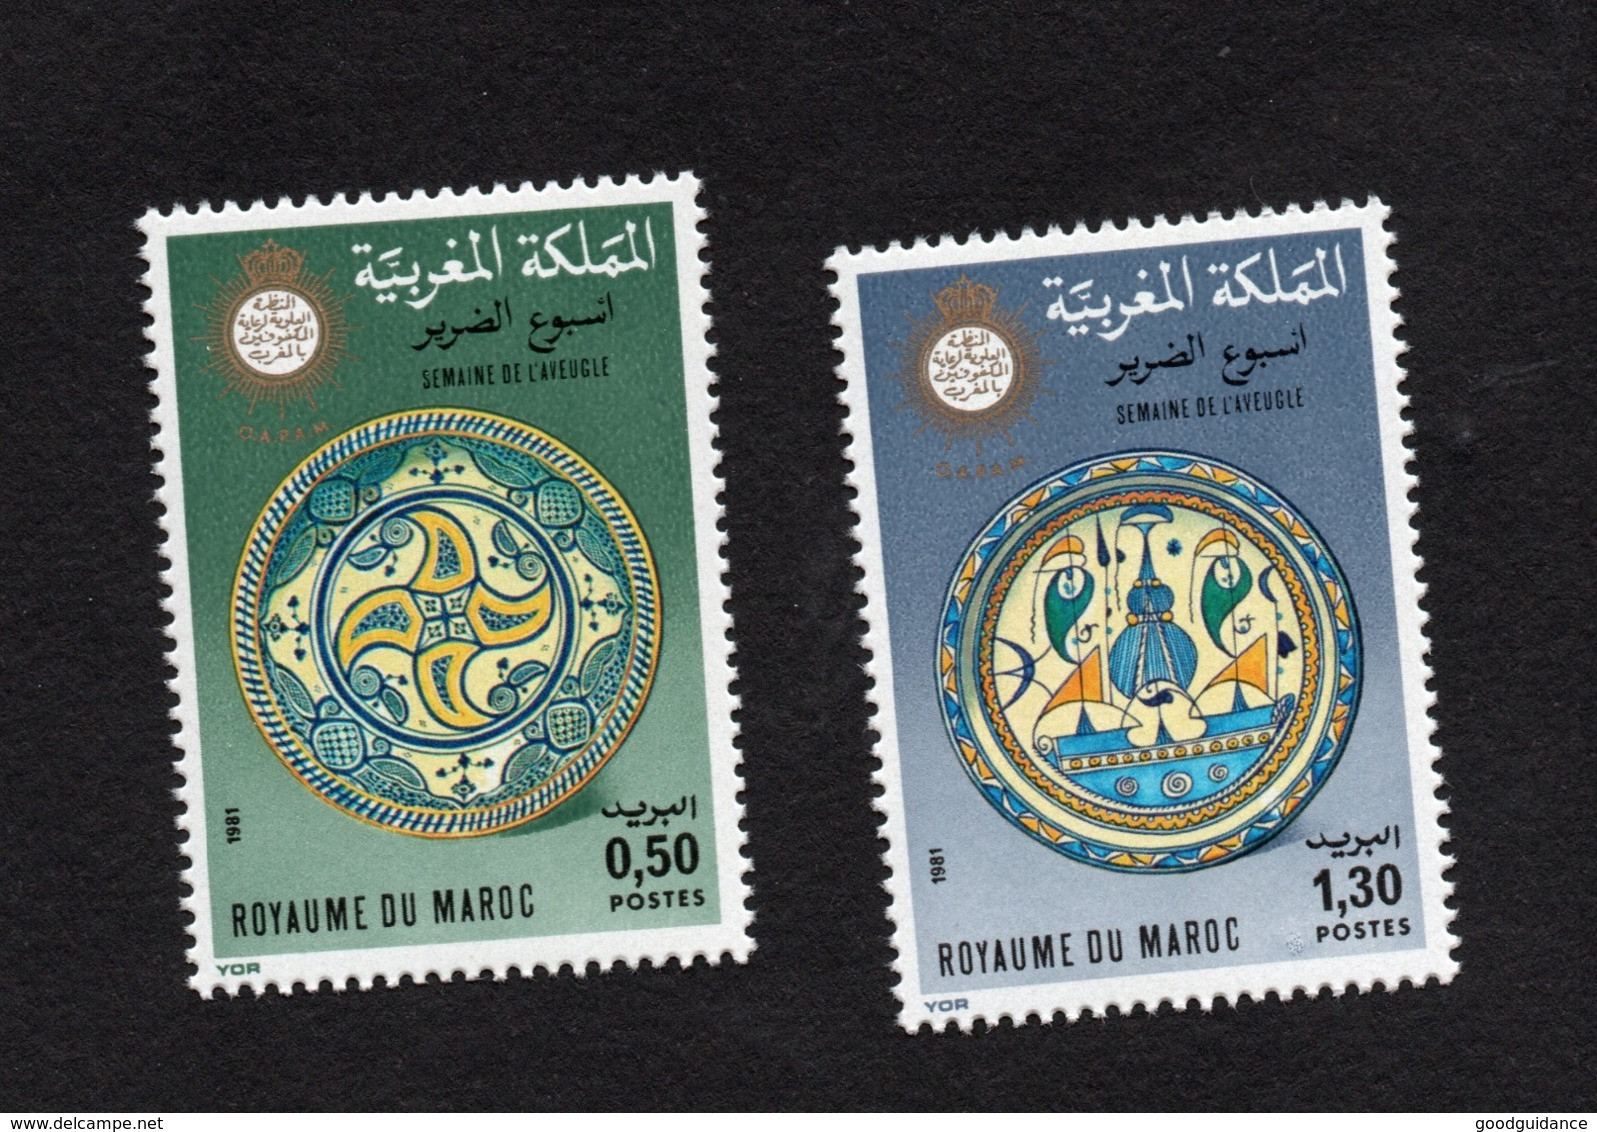 1981- Morocco - Maroc - Blind Week- Seamaine De L'aveugle - Complete Set 2v.MNH** - Disease